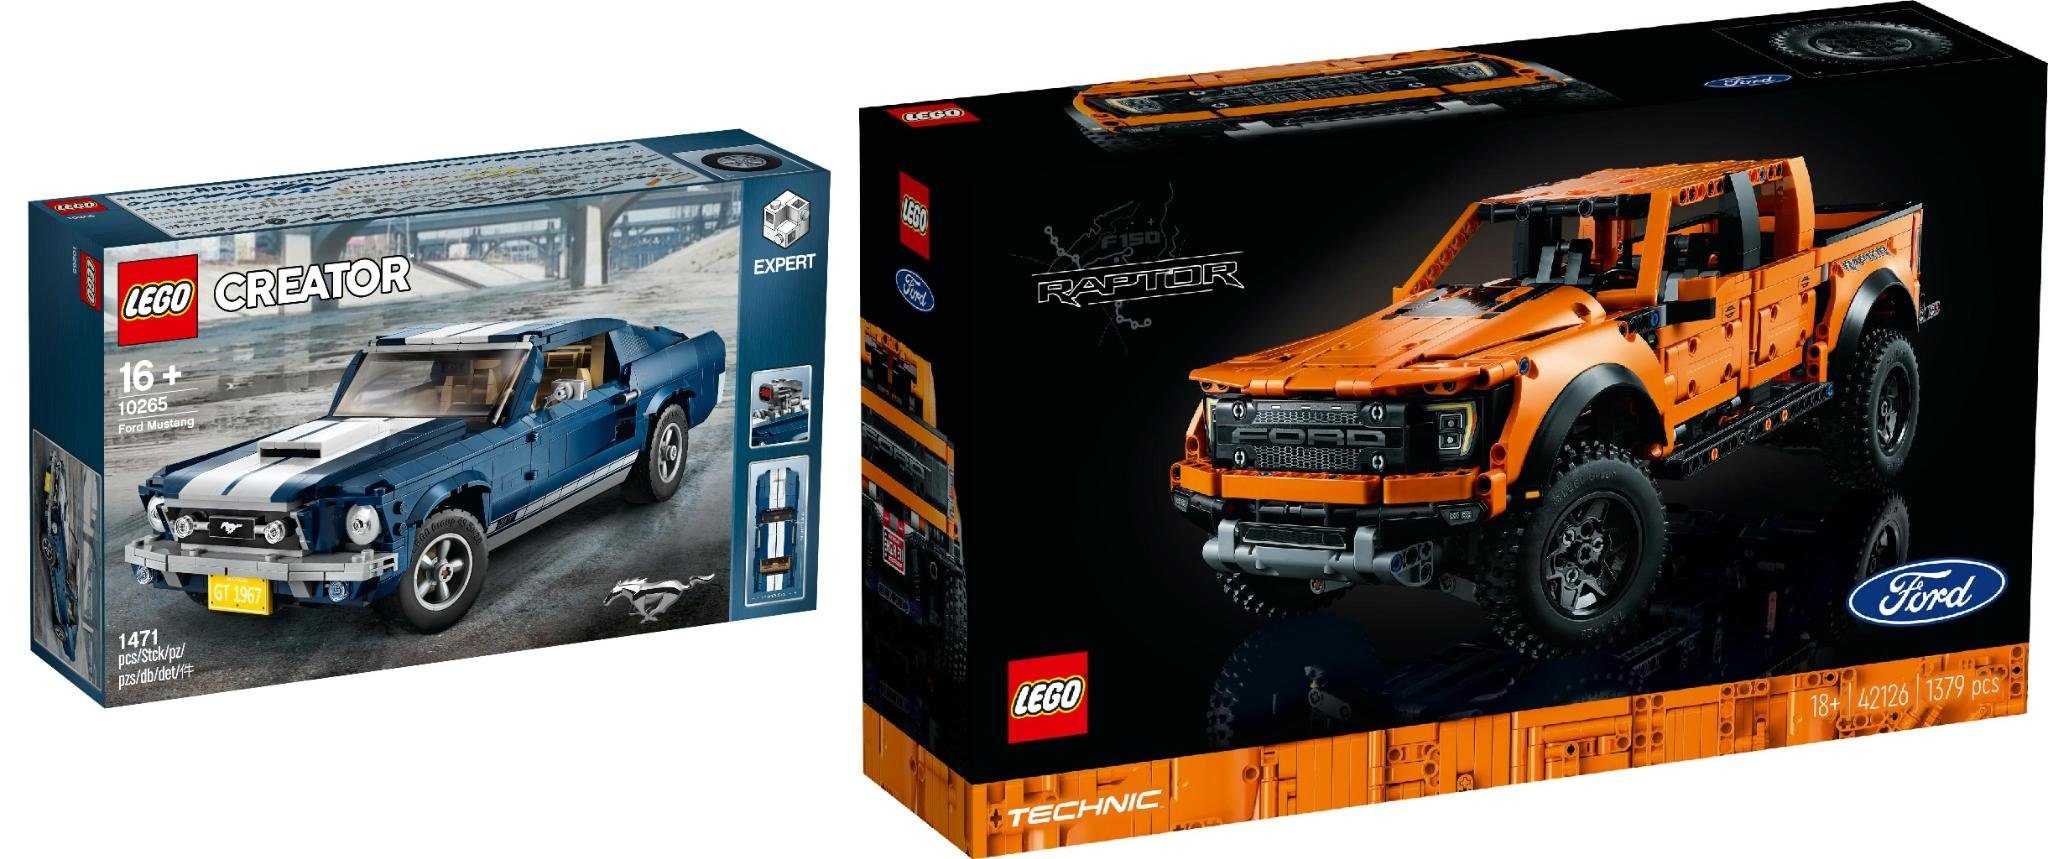 LEGO® Konstruktions-Spielset 2er Set: Creator Expert 10265 Ford Mustang +  Techn